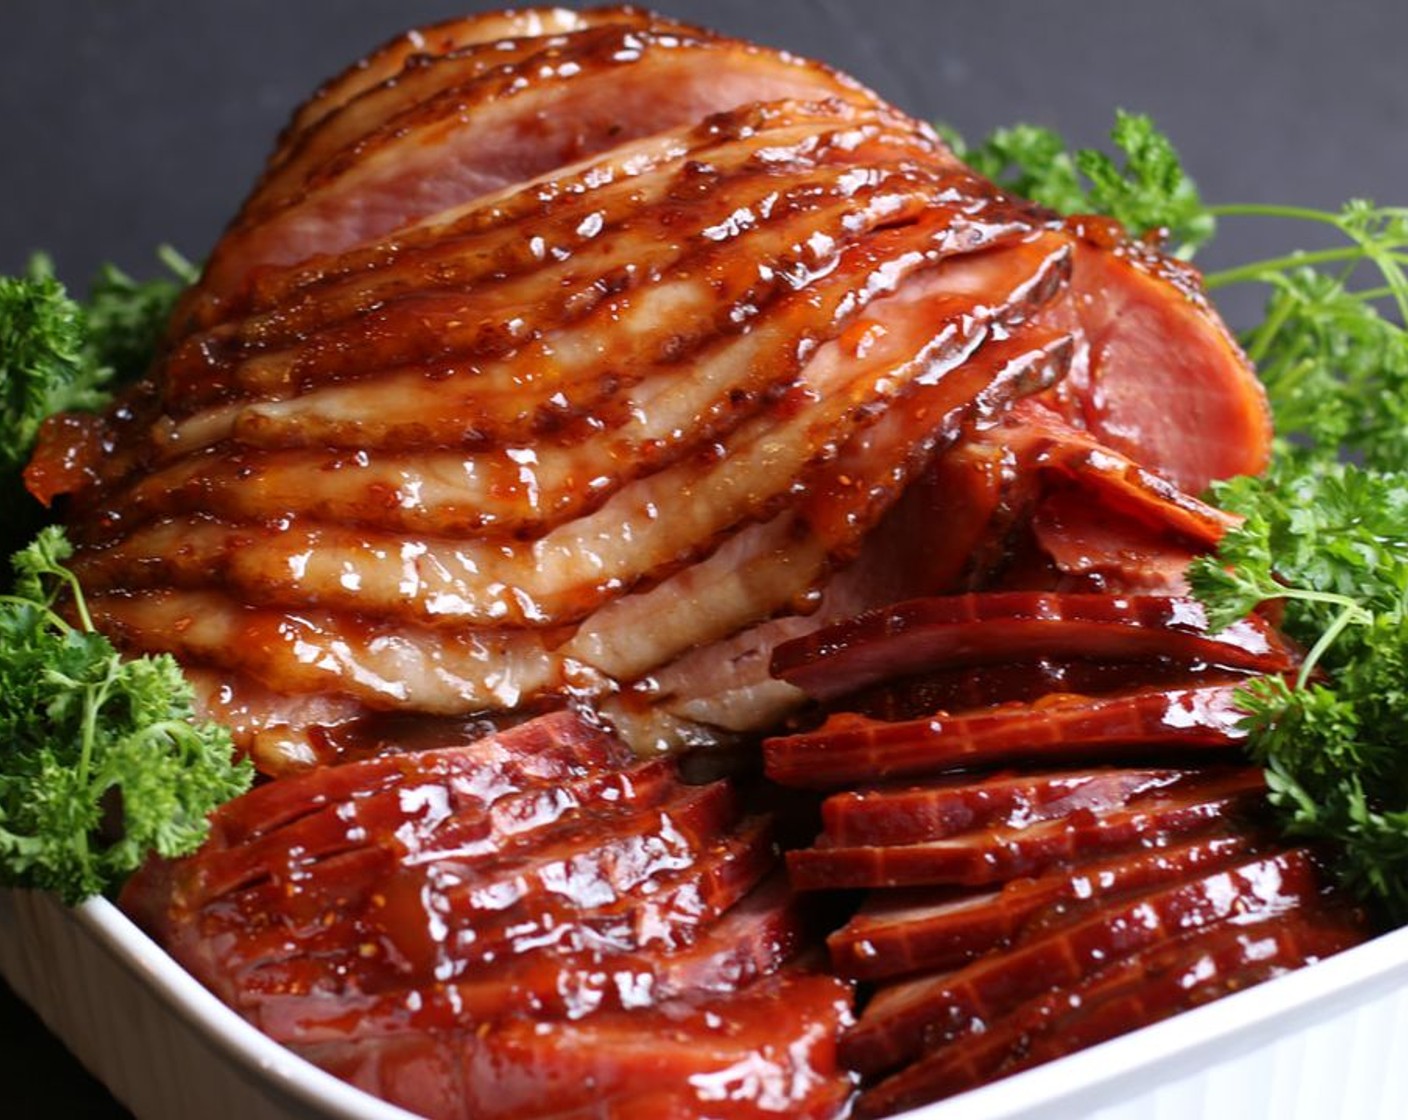 Traditional Holiday Glazed Ham - SideChef